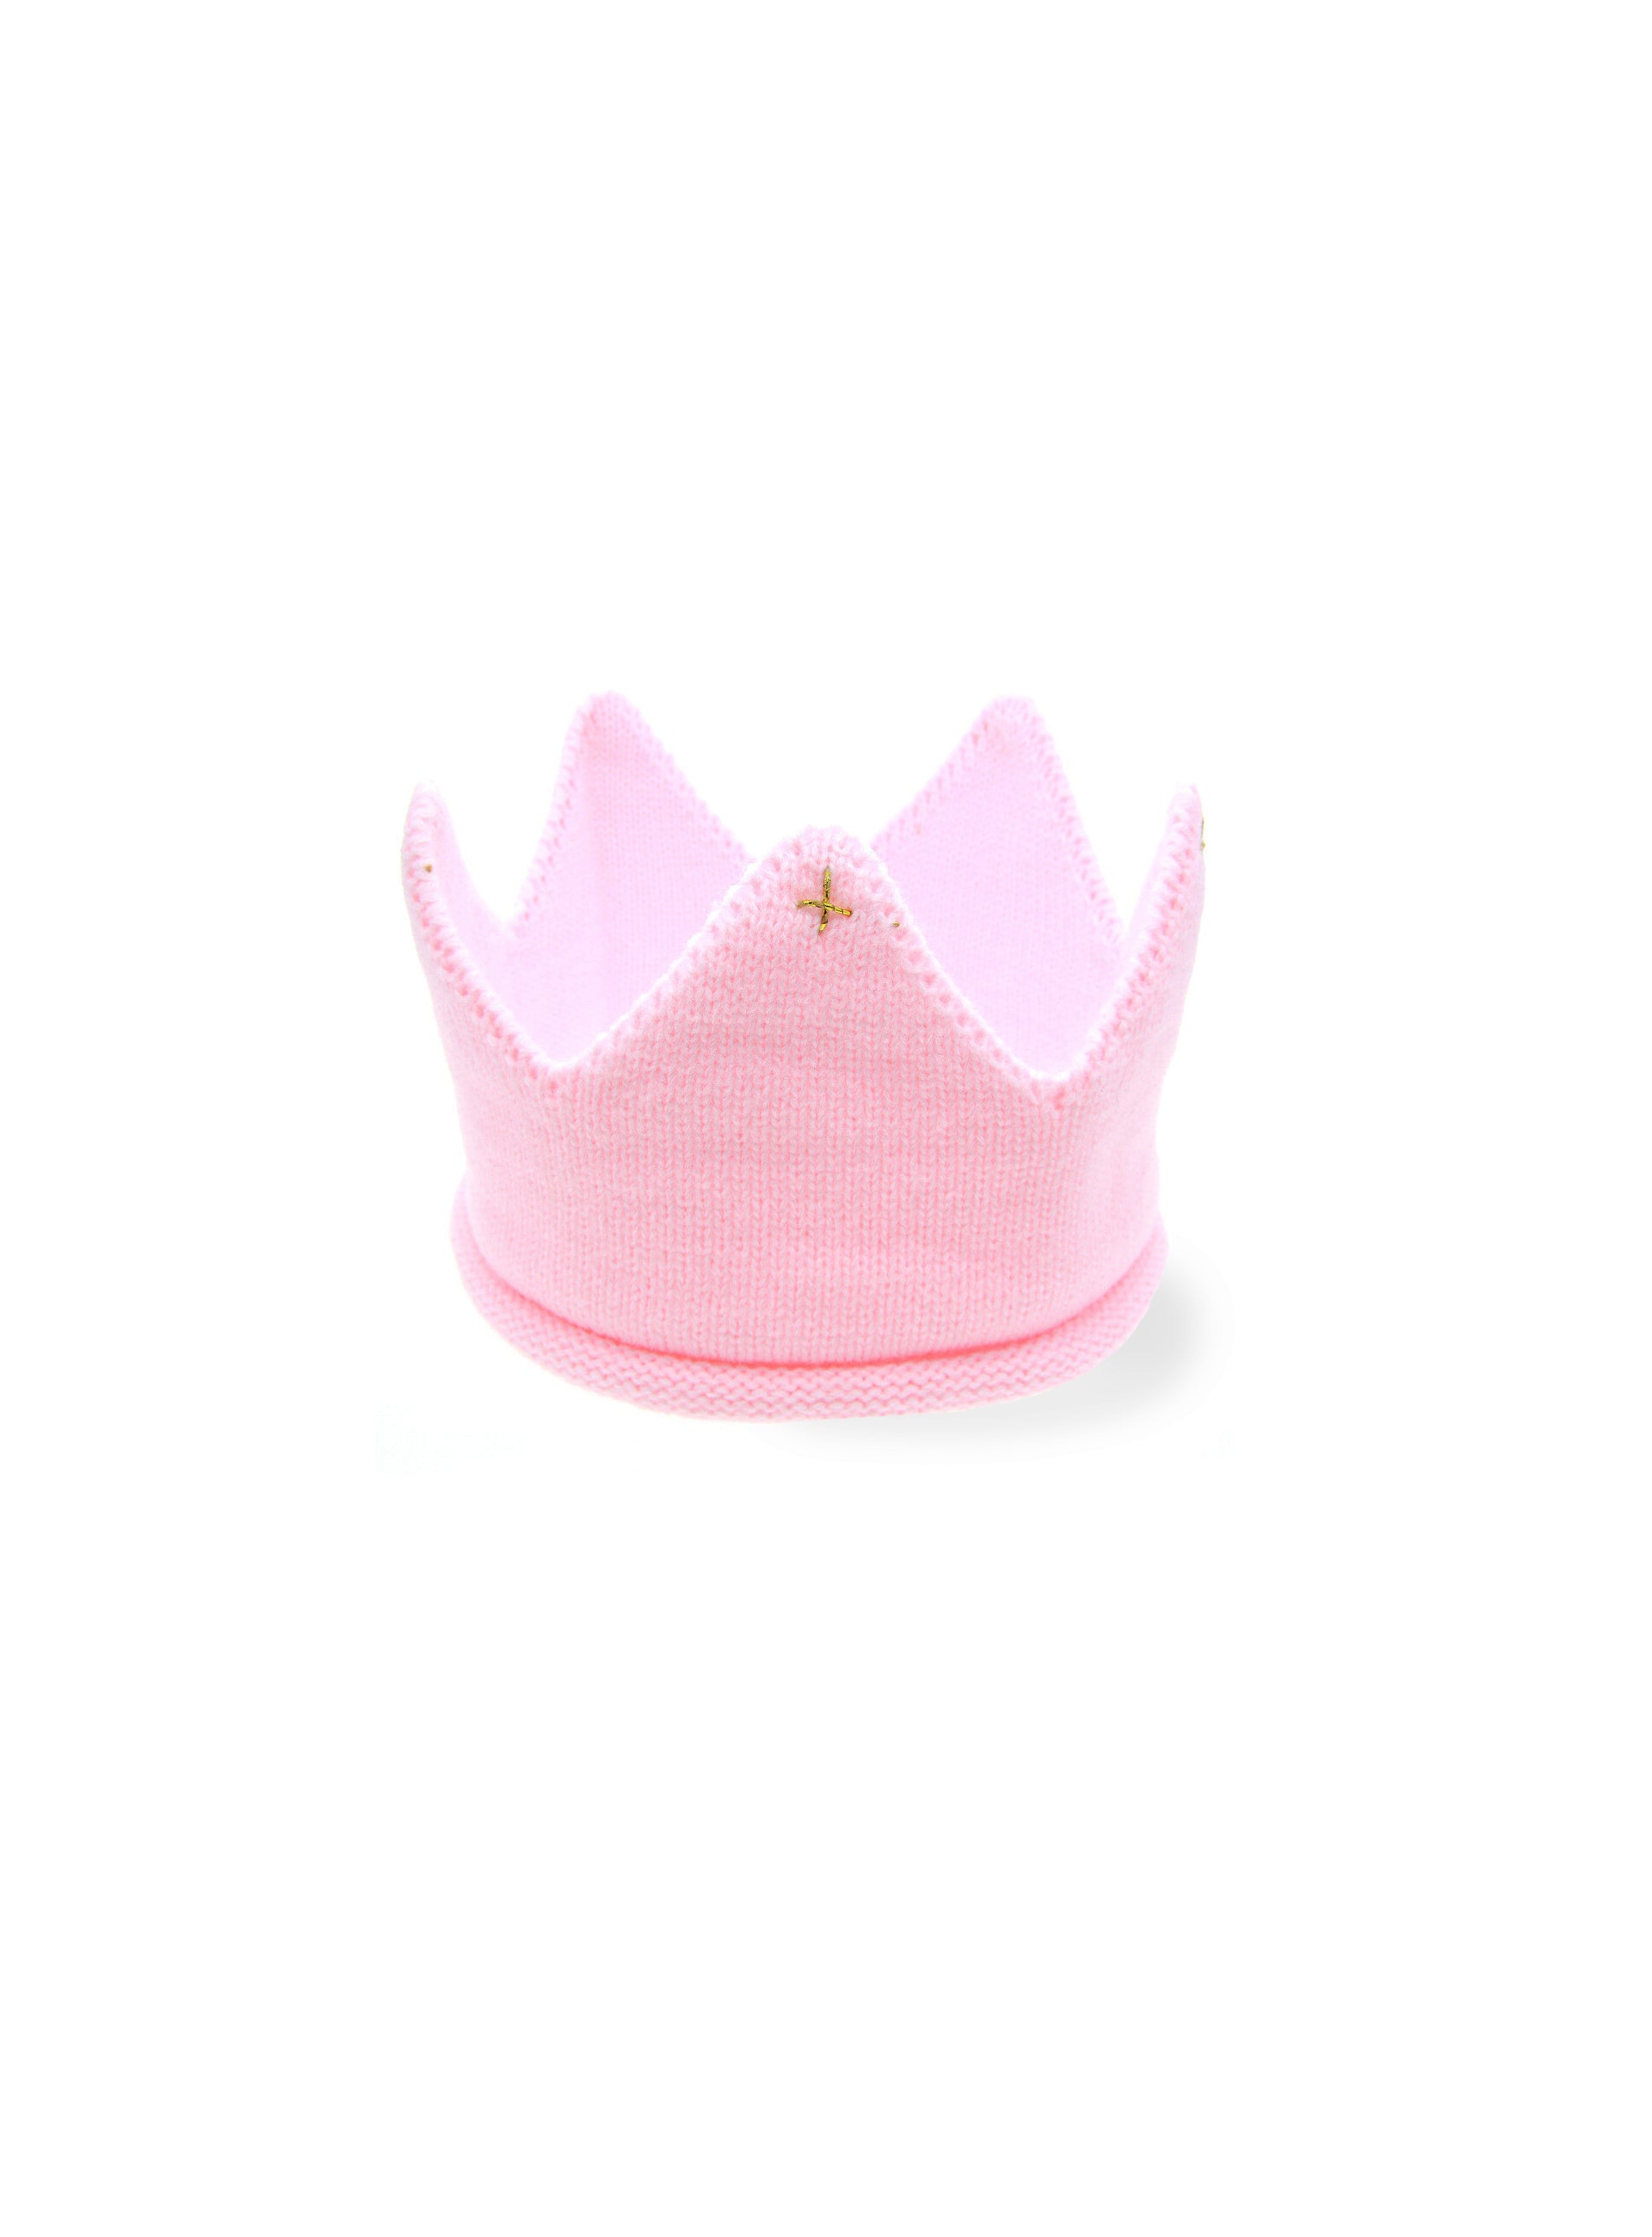 cotton candy pink princess crown